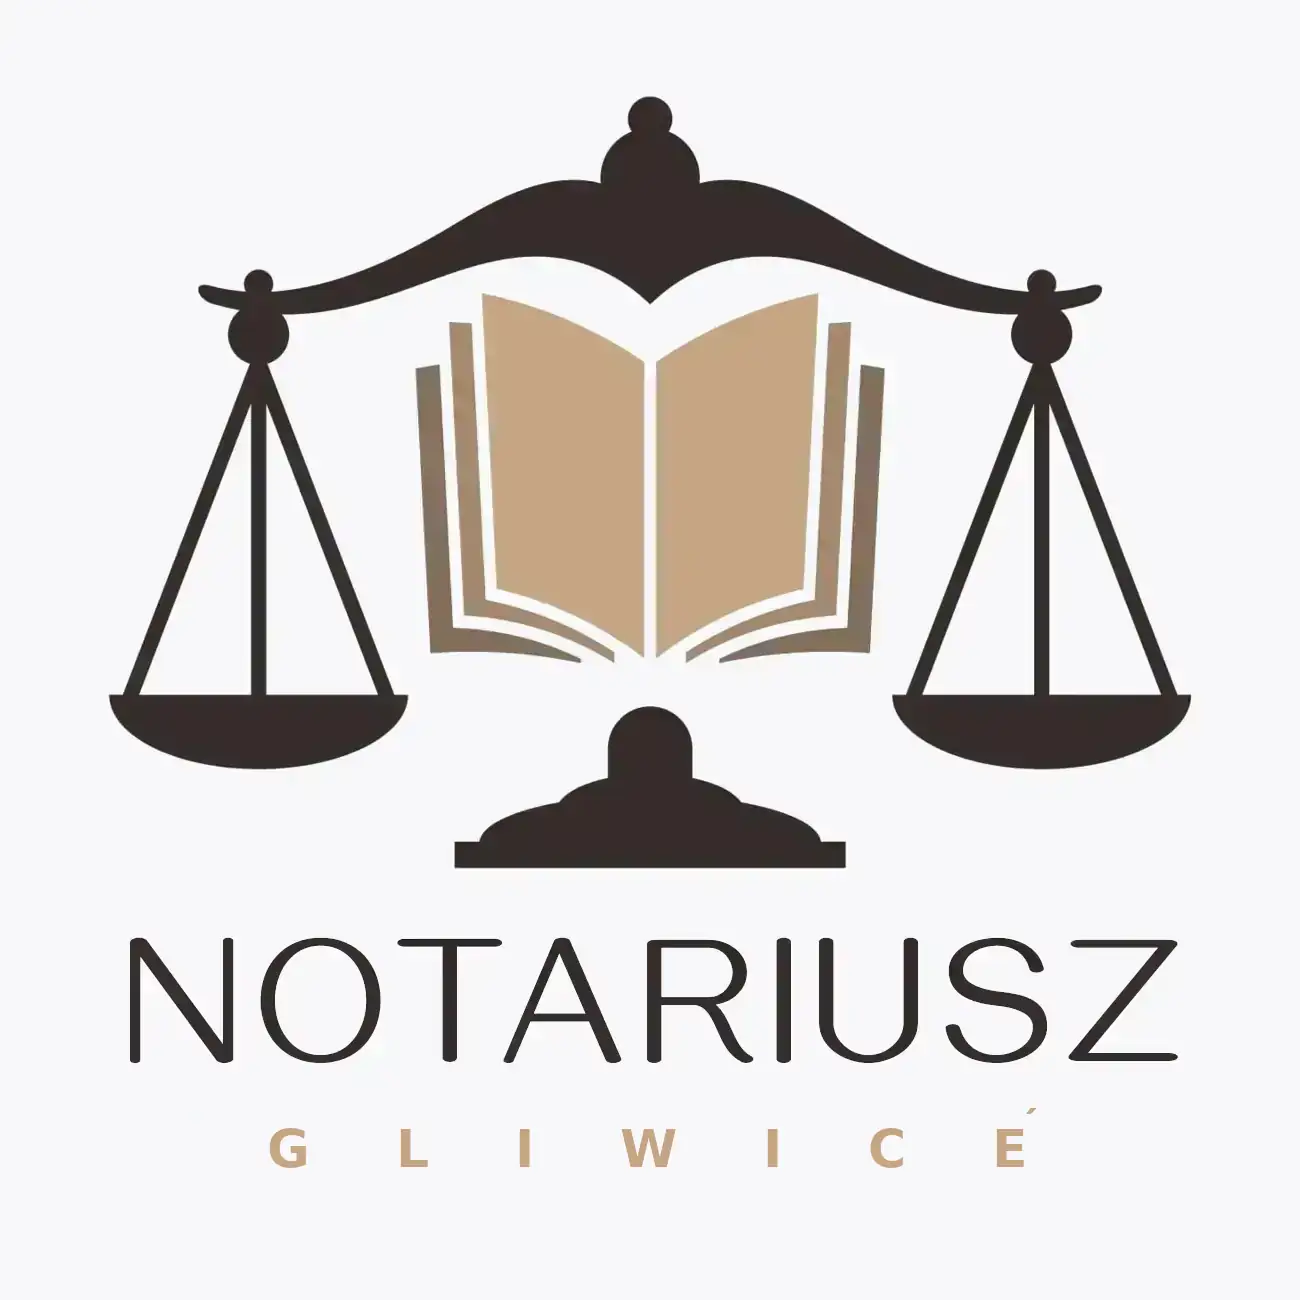 notariusz gliwice